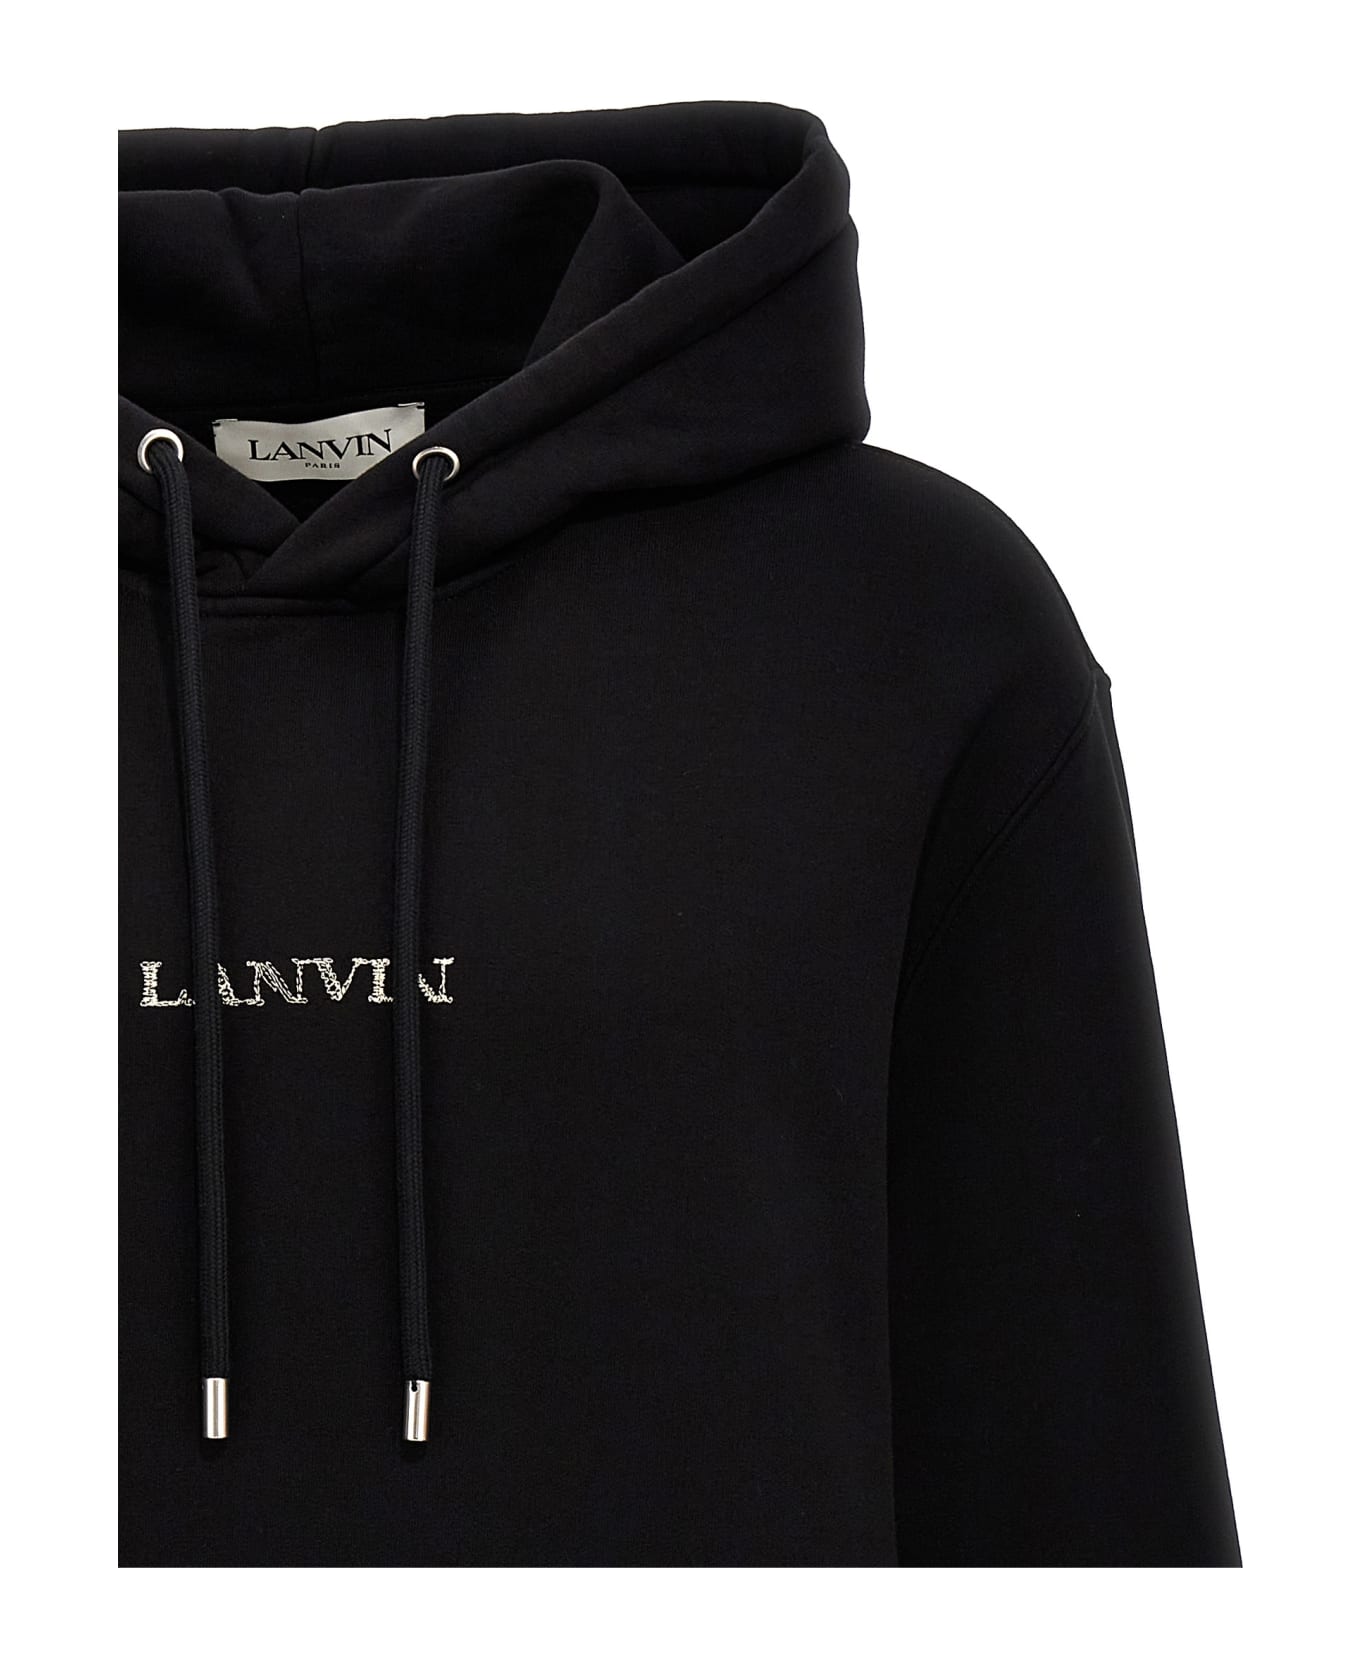 Lanvin Logo Embroidery Hoodie - Black